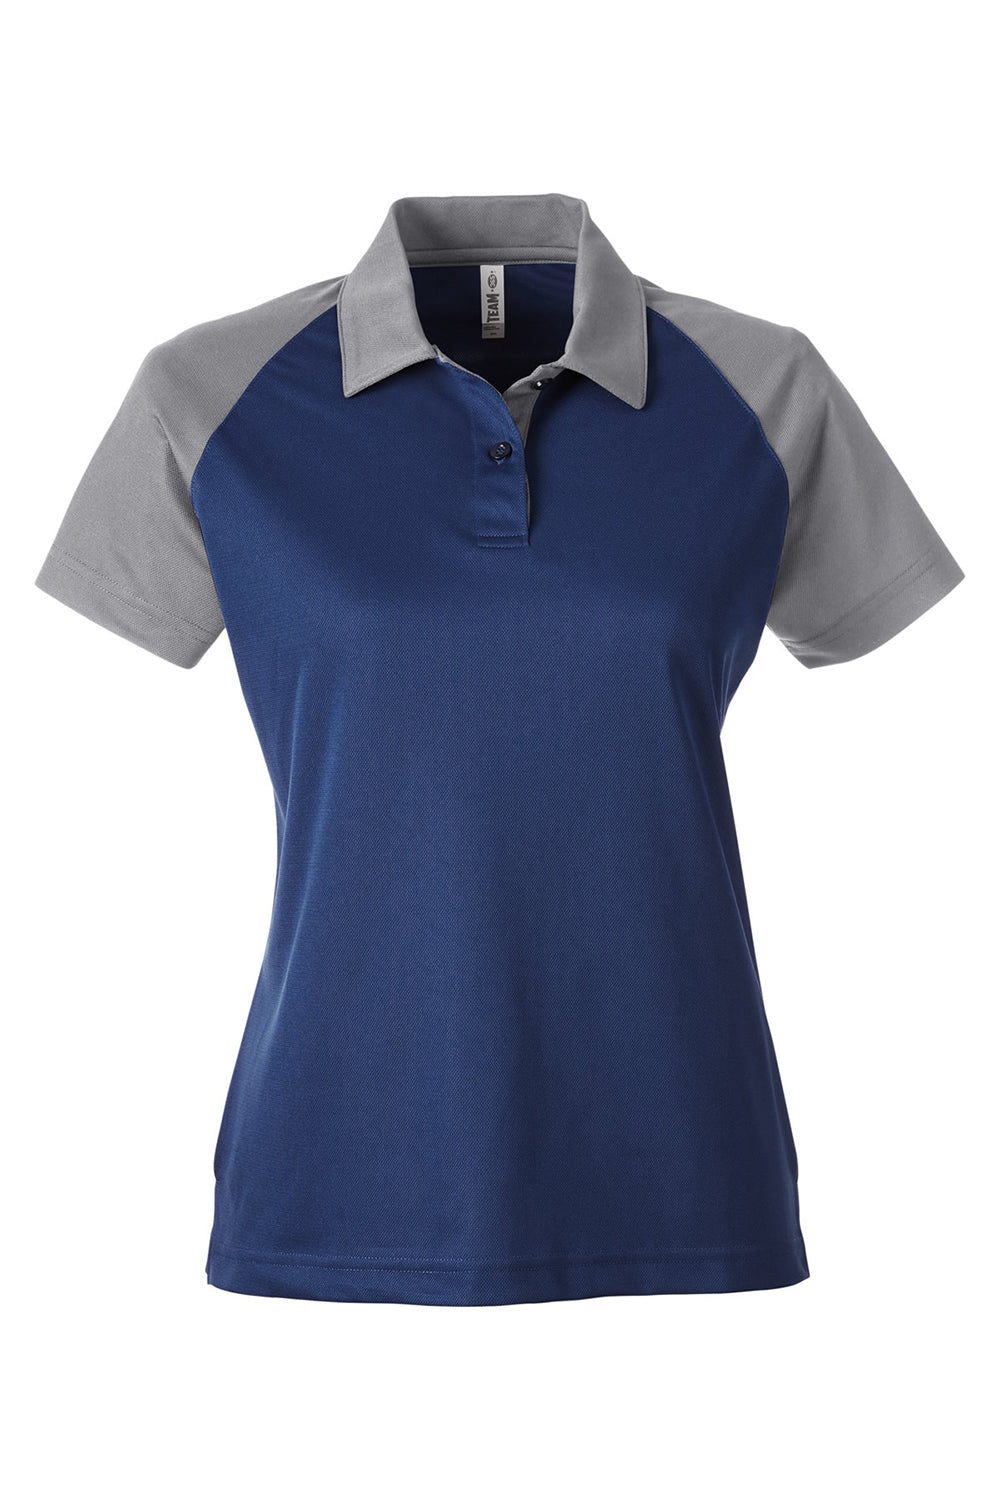 Team 365 TT21CW Womens Command Colorblock Moisture Wicking Short Sleeve Polo Shirt Dark Navy Blue/Graphite Grey Flat Front